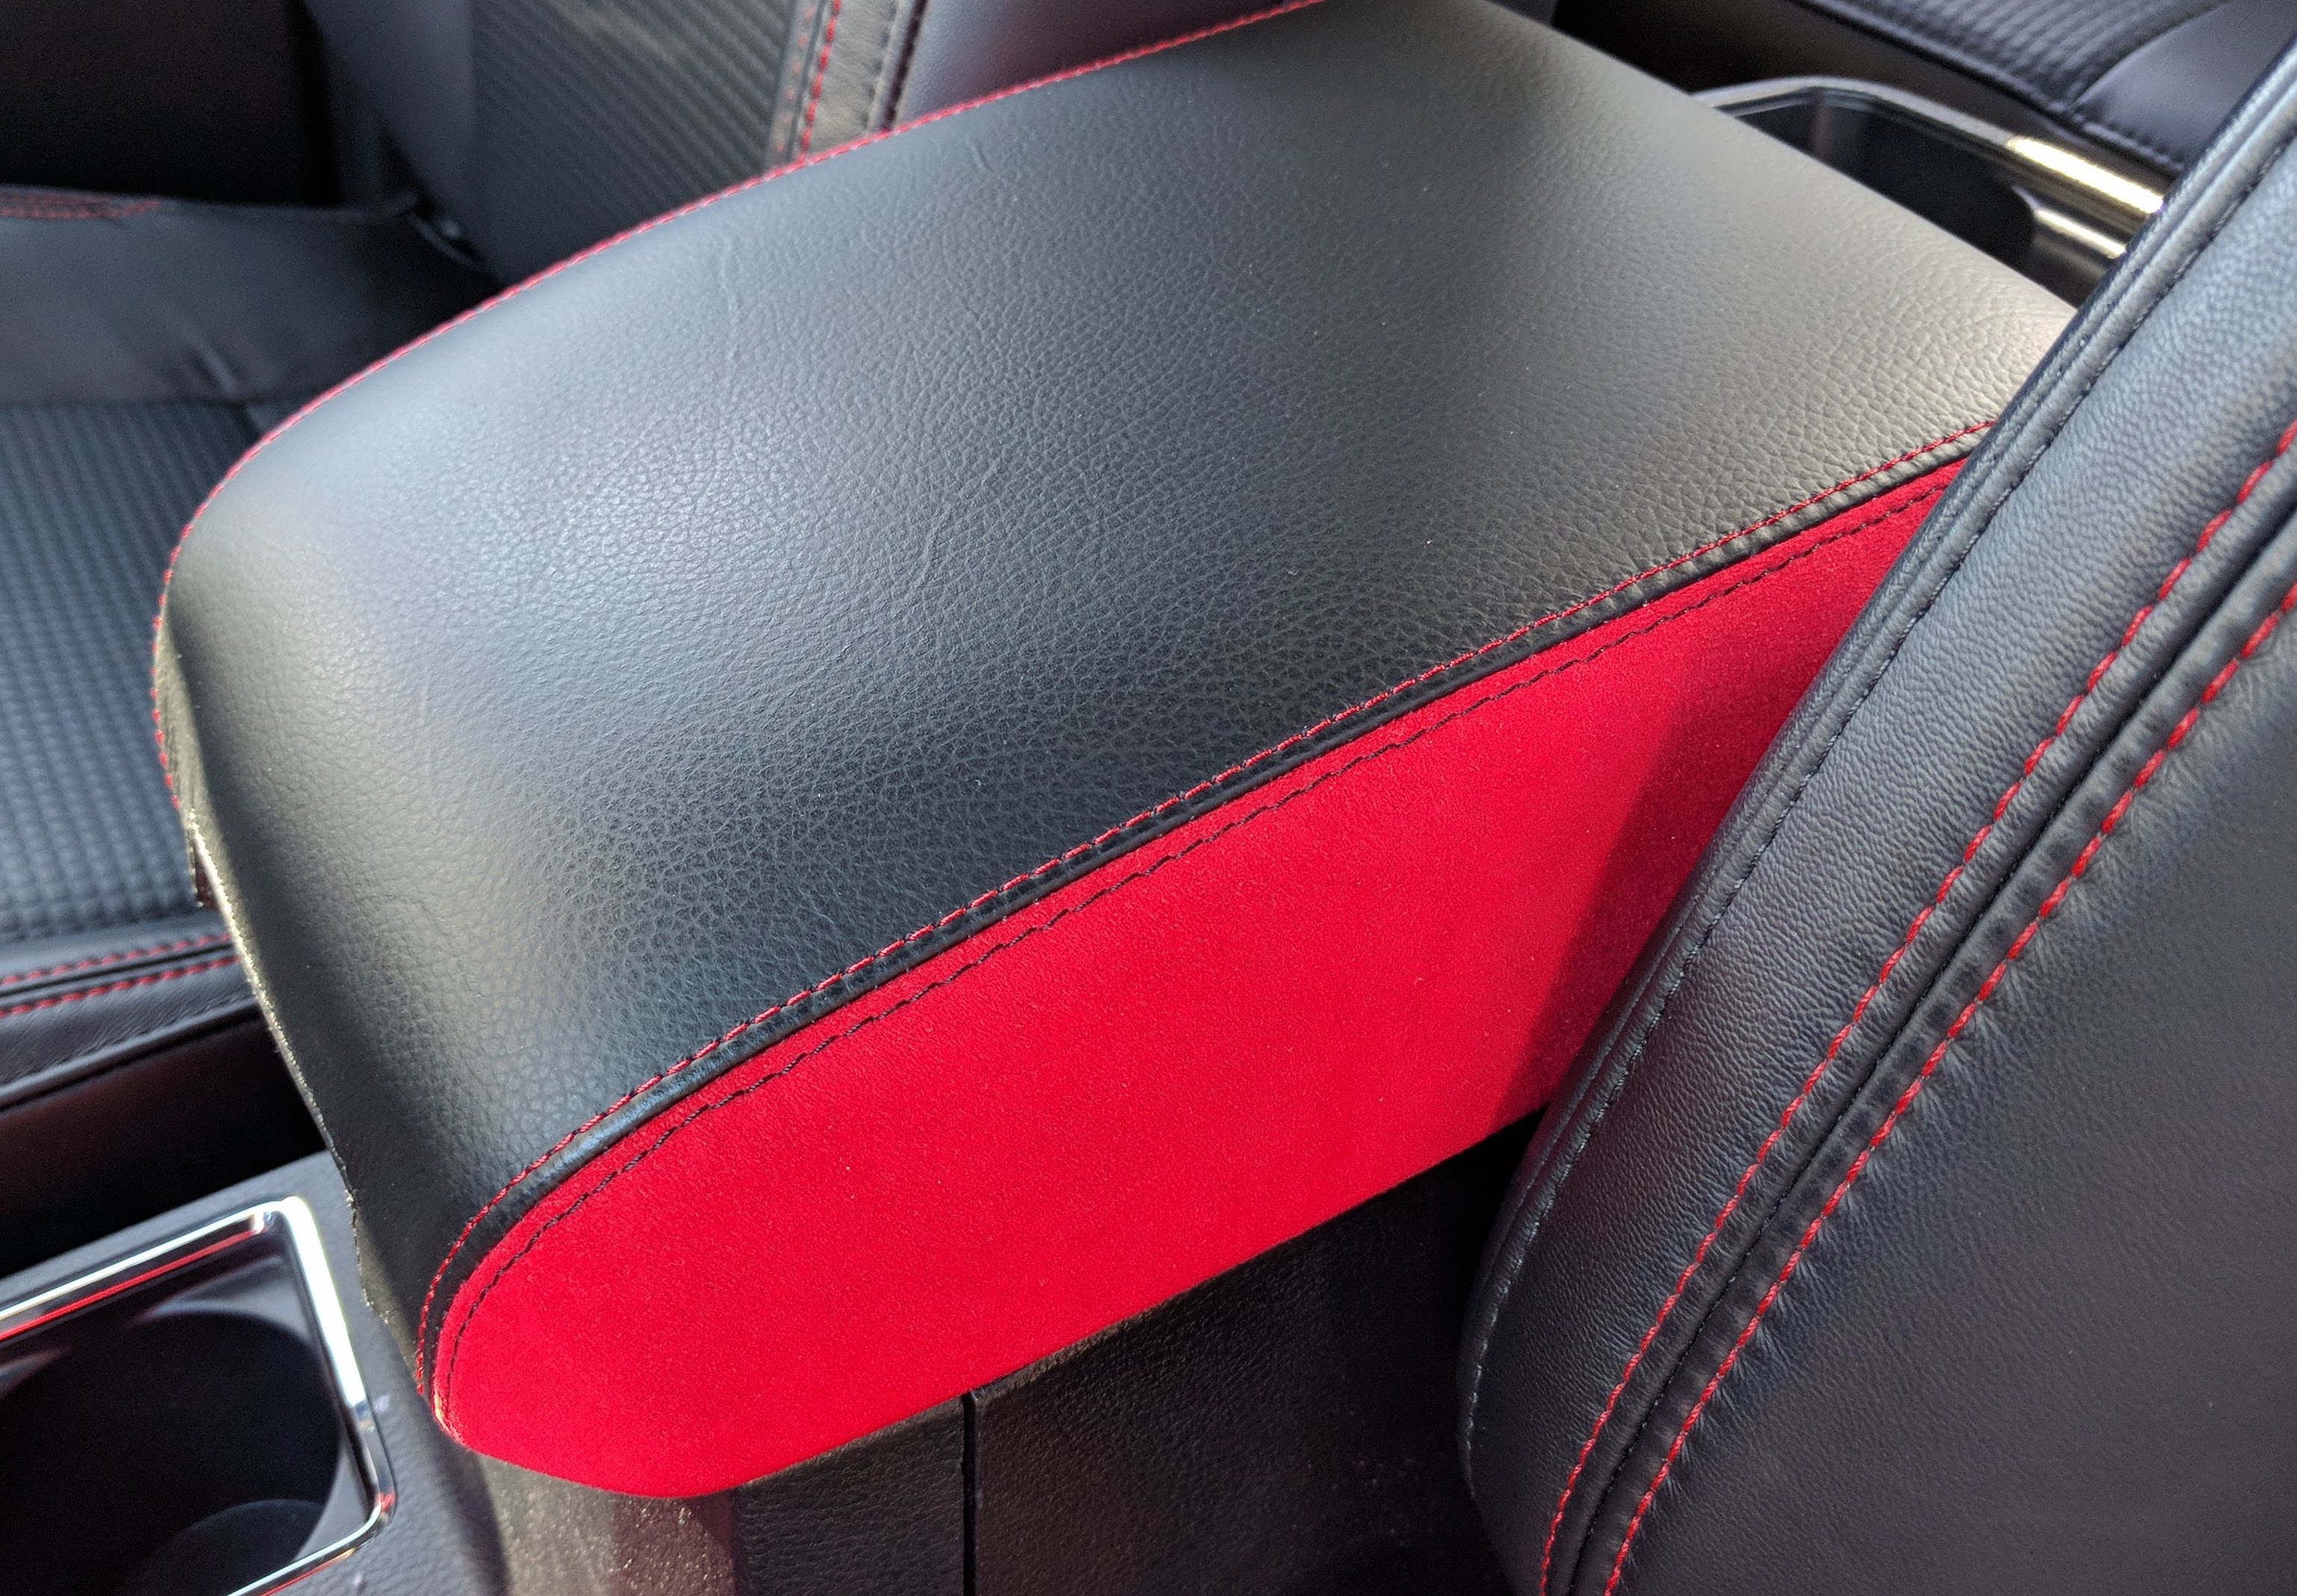 Details about   Fits 10-13 Hyundai Genesis Coupe Vinyl Center Console Armrest Cover Red Stitch